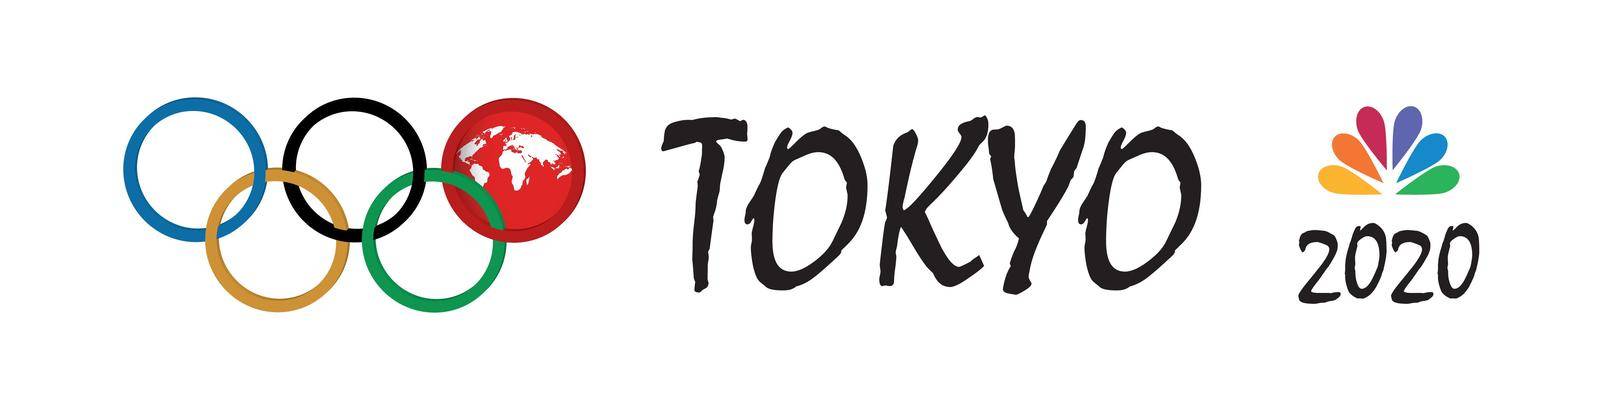 Banner Tokyo 2020 international sports olympics. by Samodelkin20